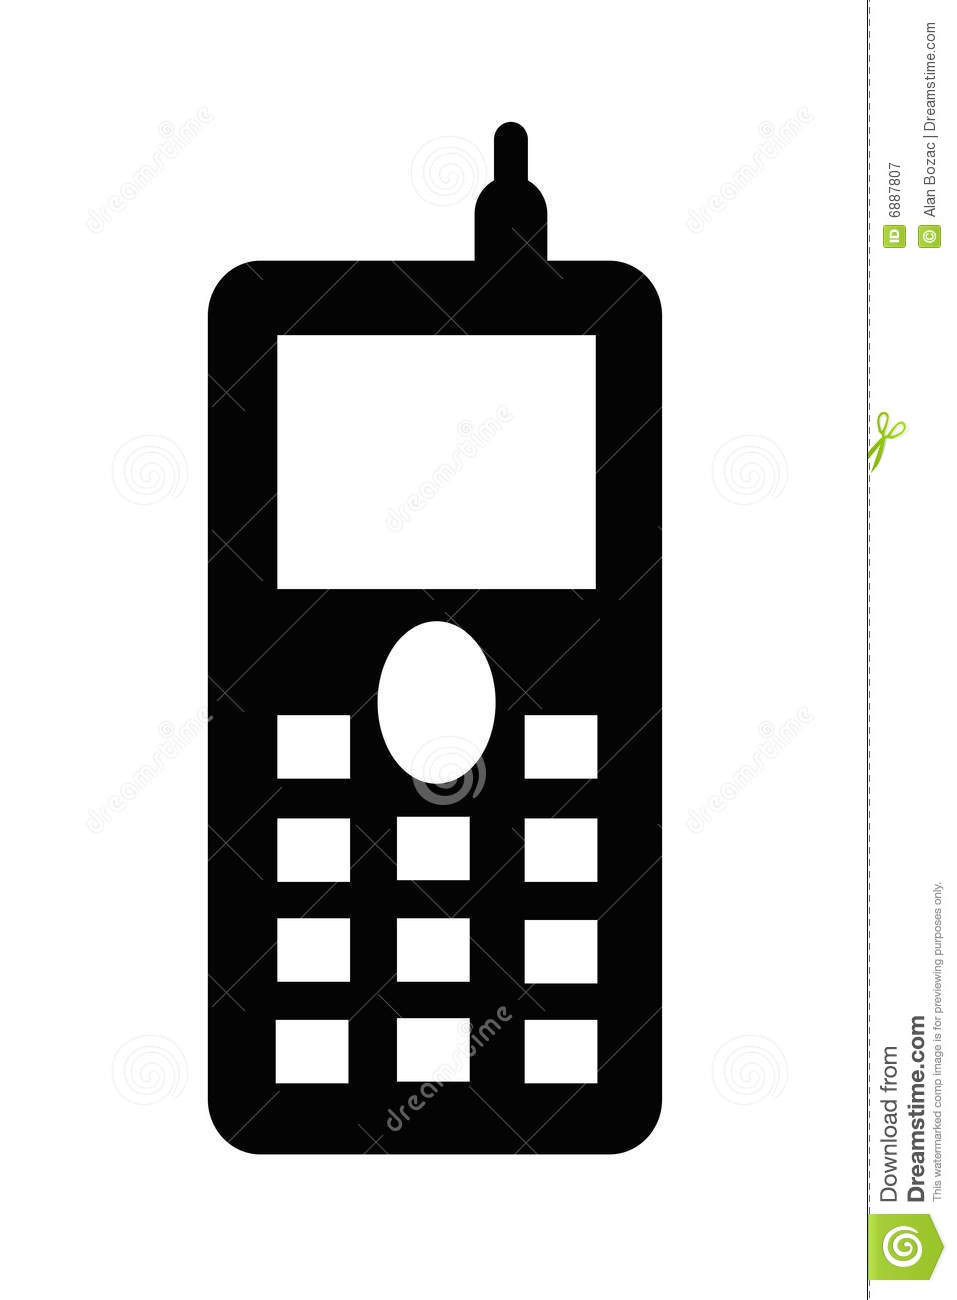 cellphone clipart simple phone